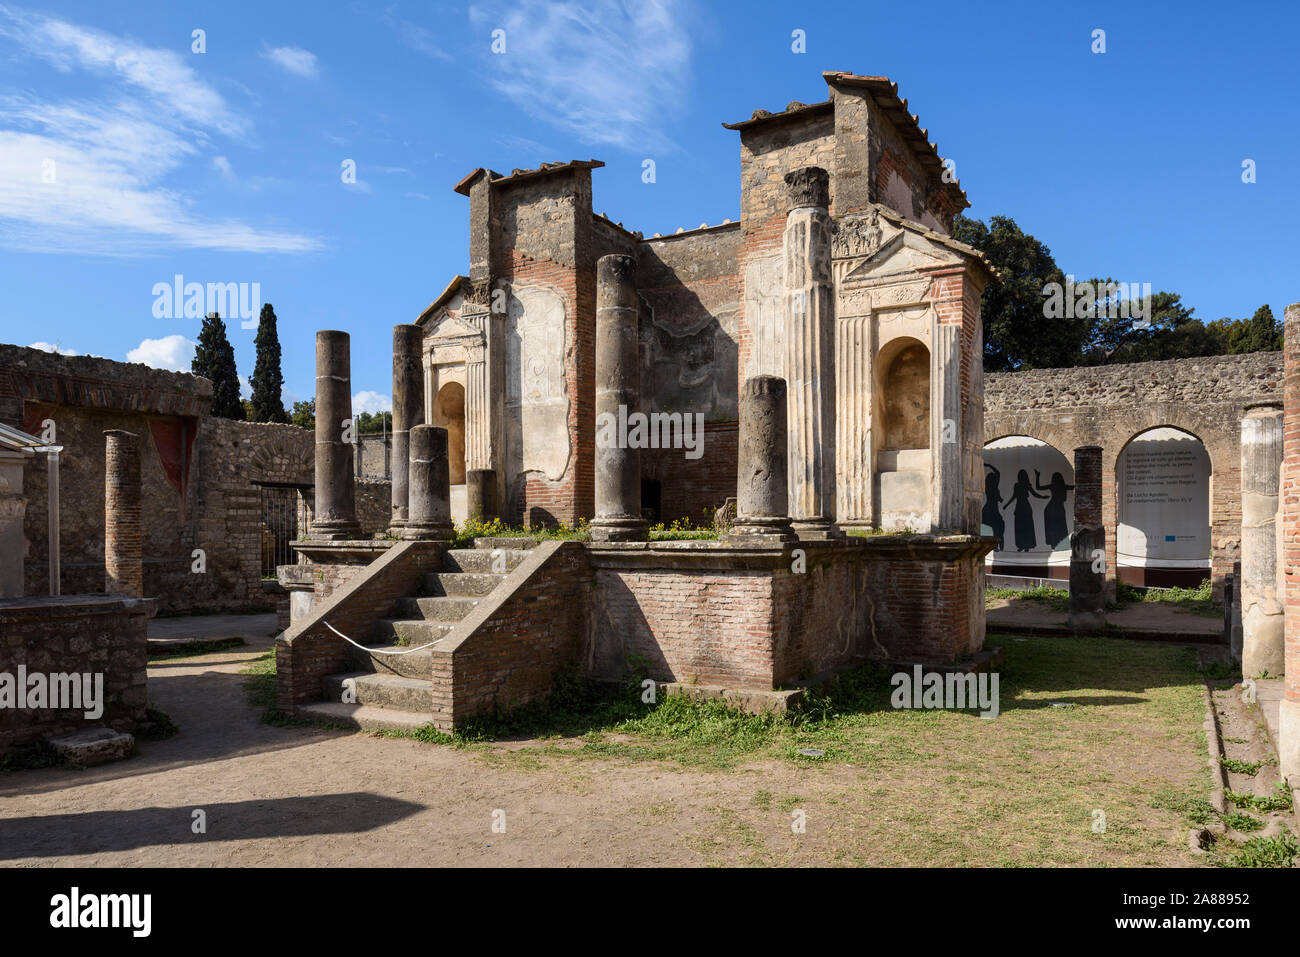 Pompei. Italien. Archäologische Stätte von Pompeji. Tempio di Iside/Tempel der Isis. Regio VIII - Insula 7-28 Stockfoto